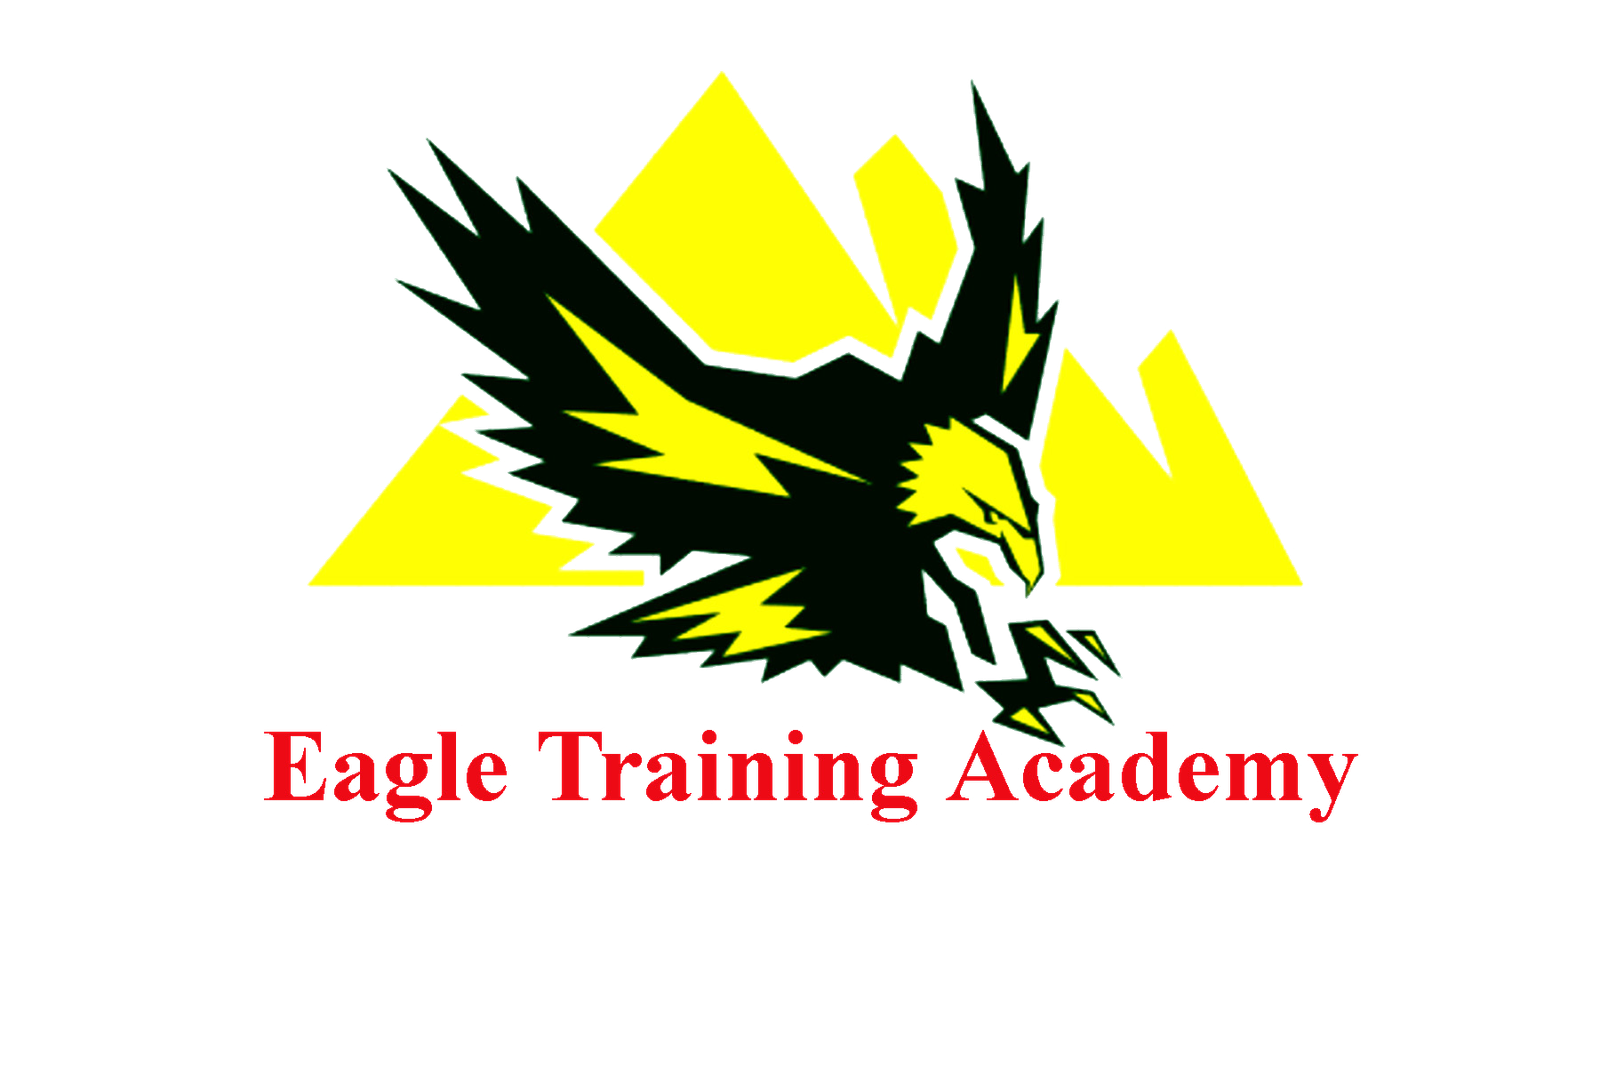 Eagle Training Academy